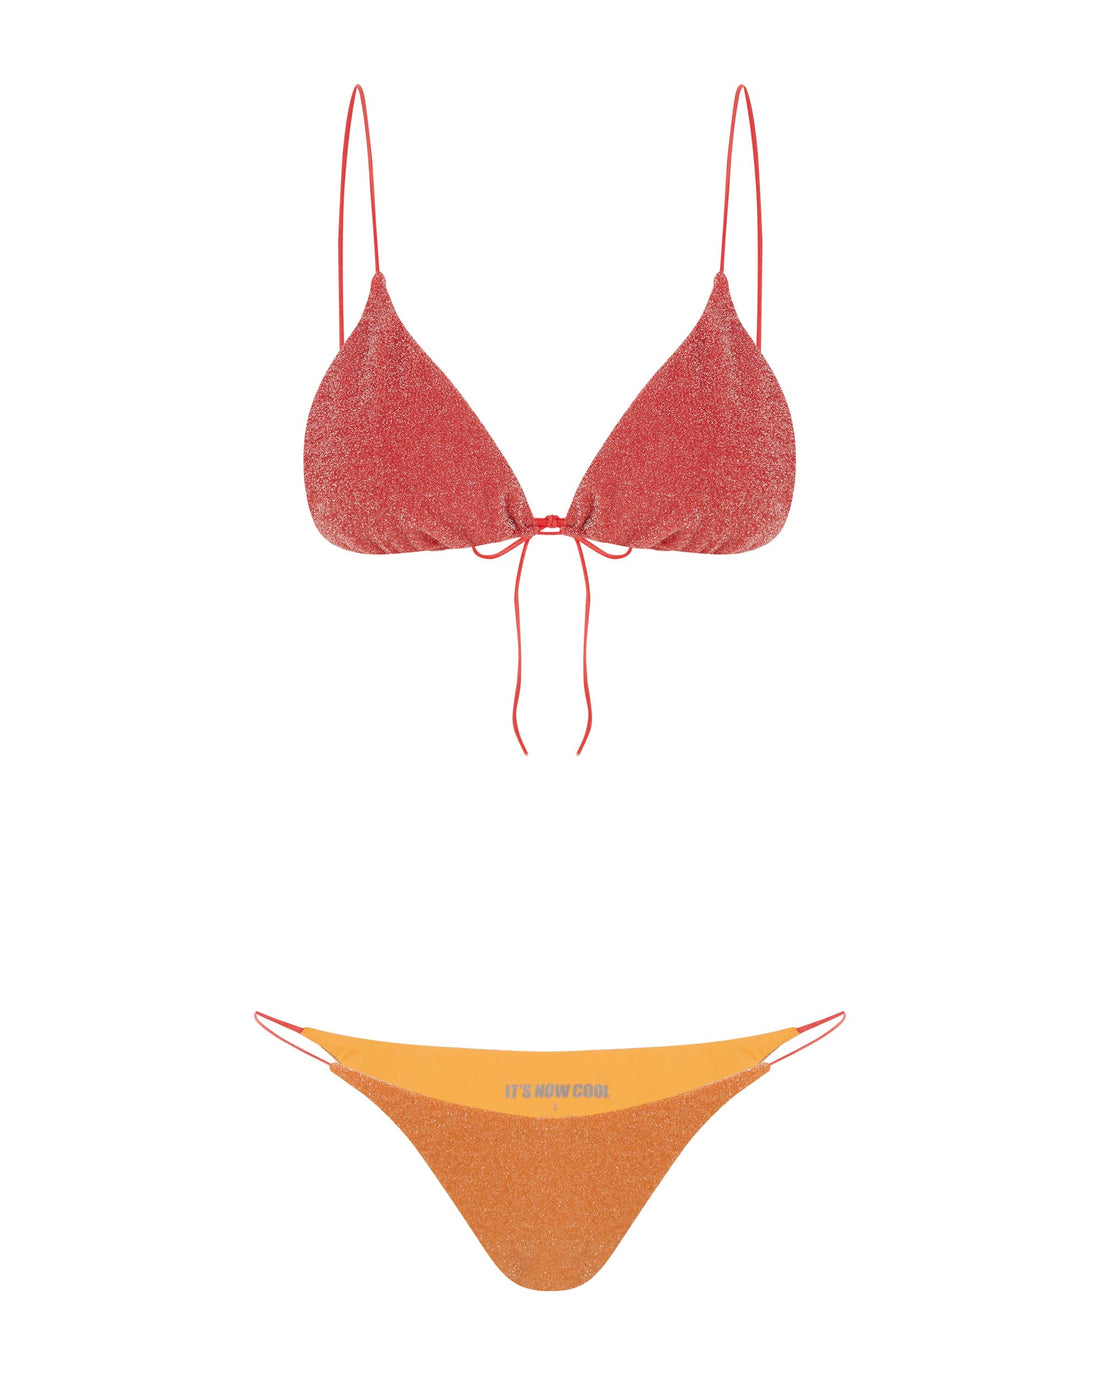 Buy OAS Triangle Top Cherry Bikini - Red